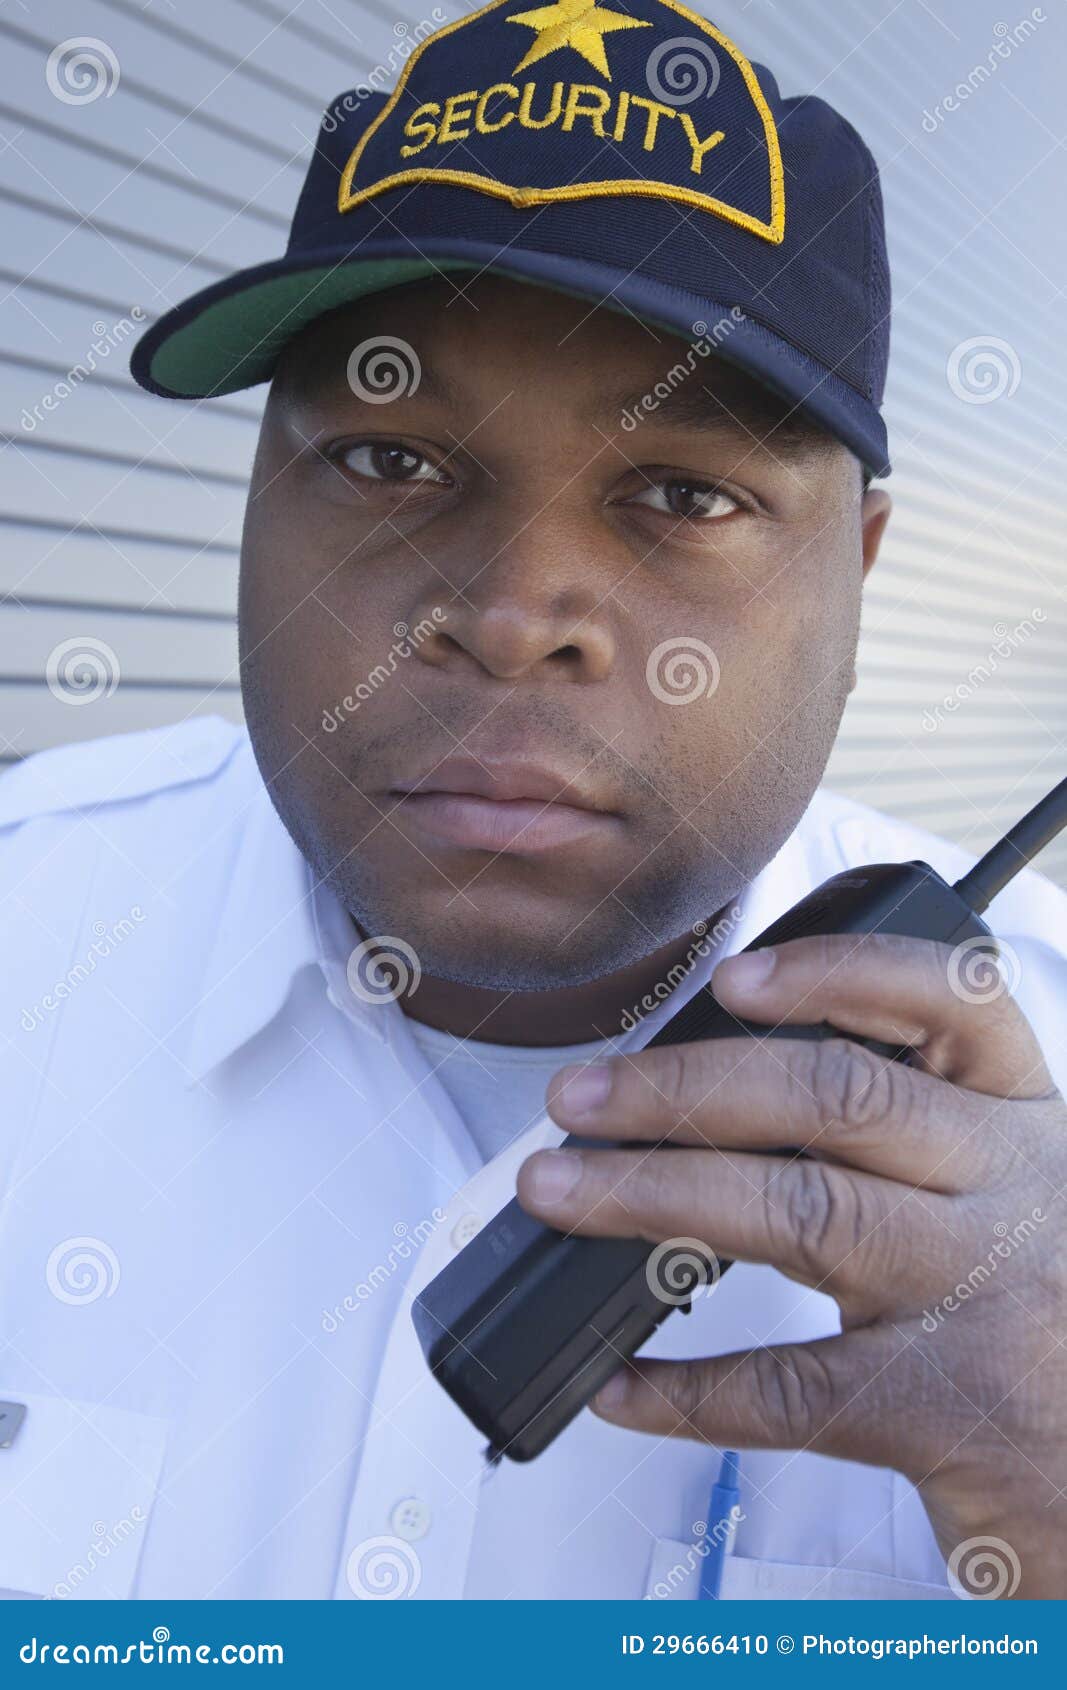 security guard using walkie talkie